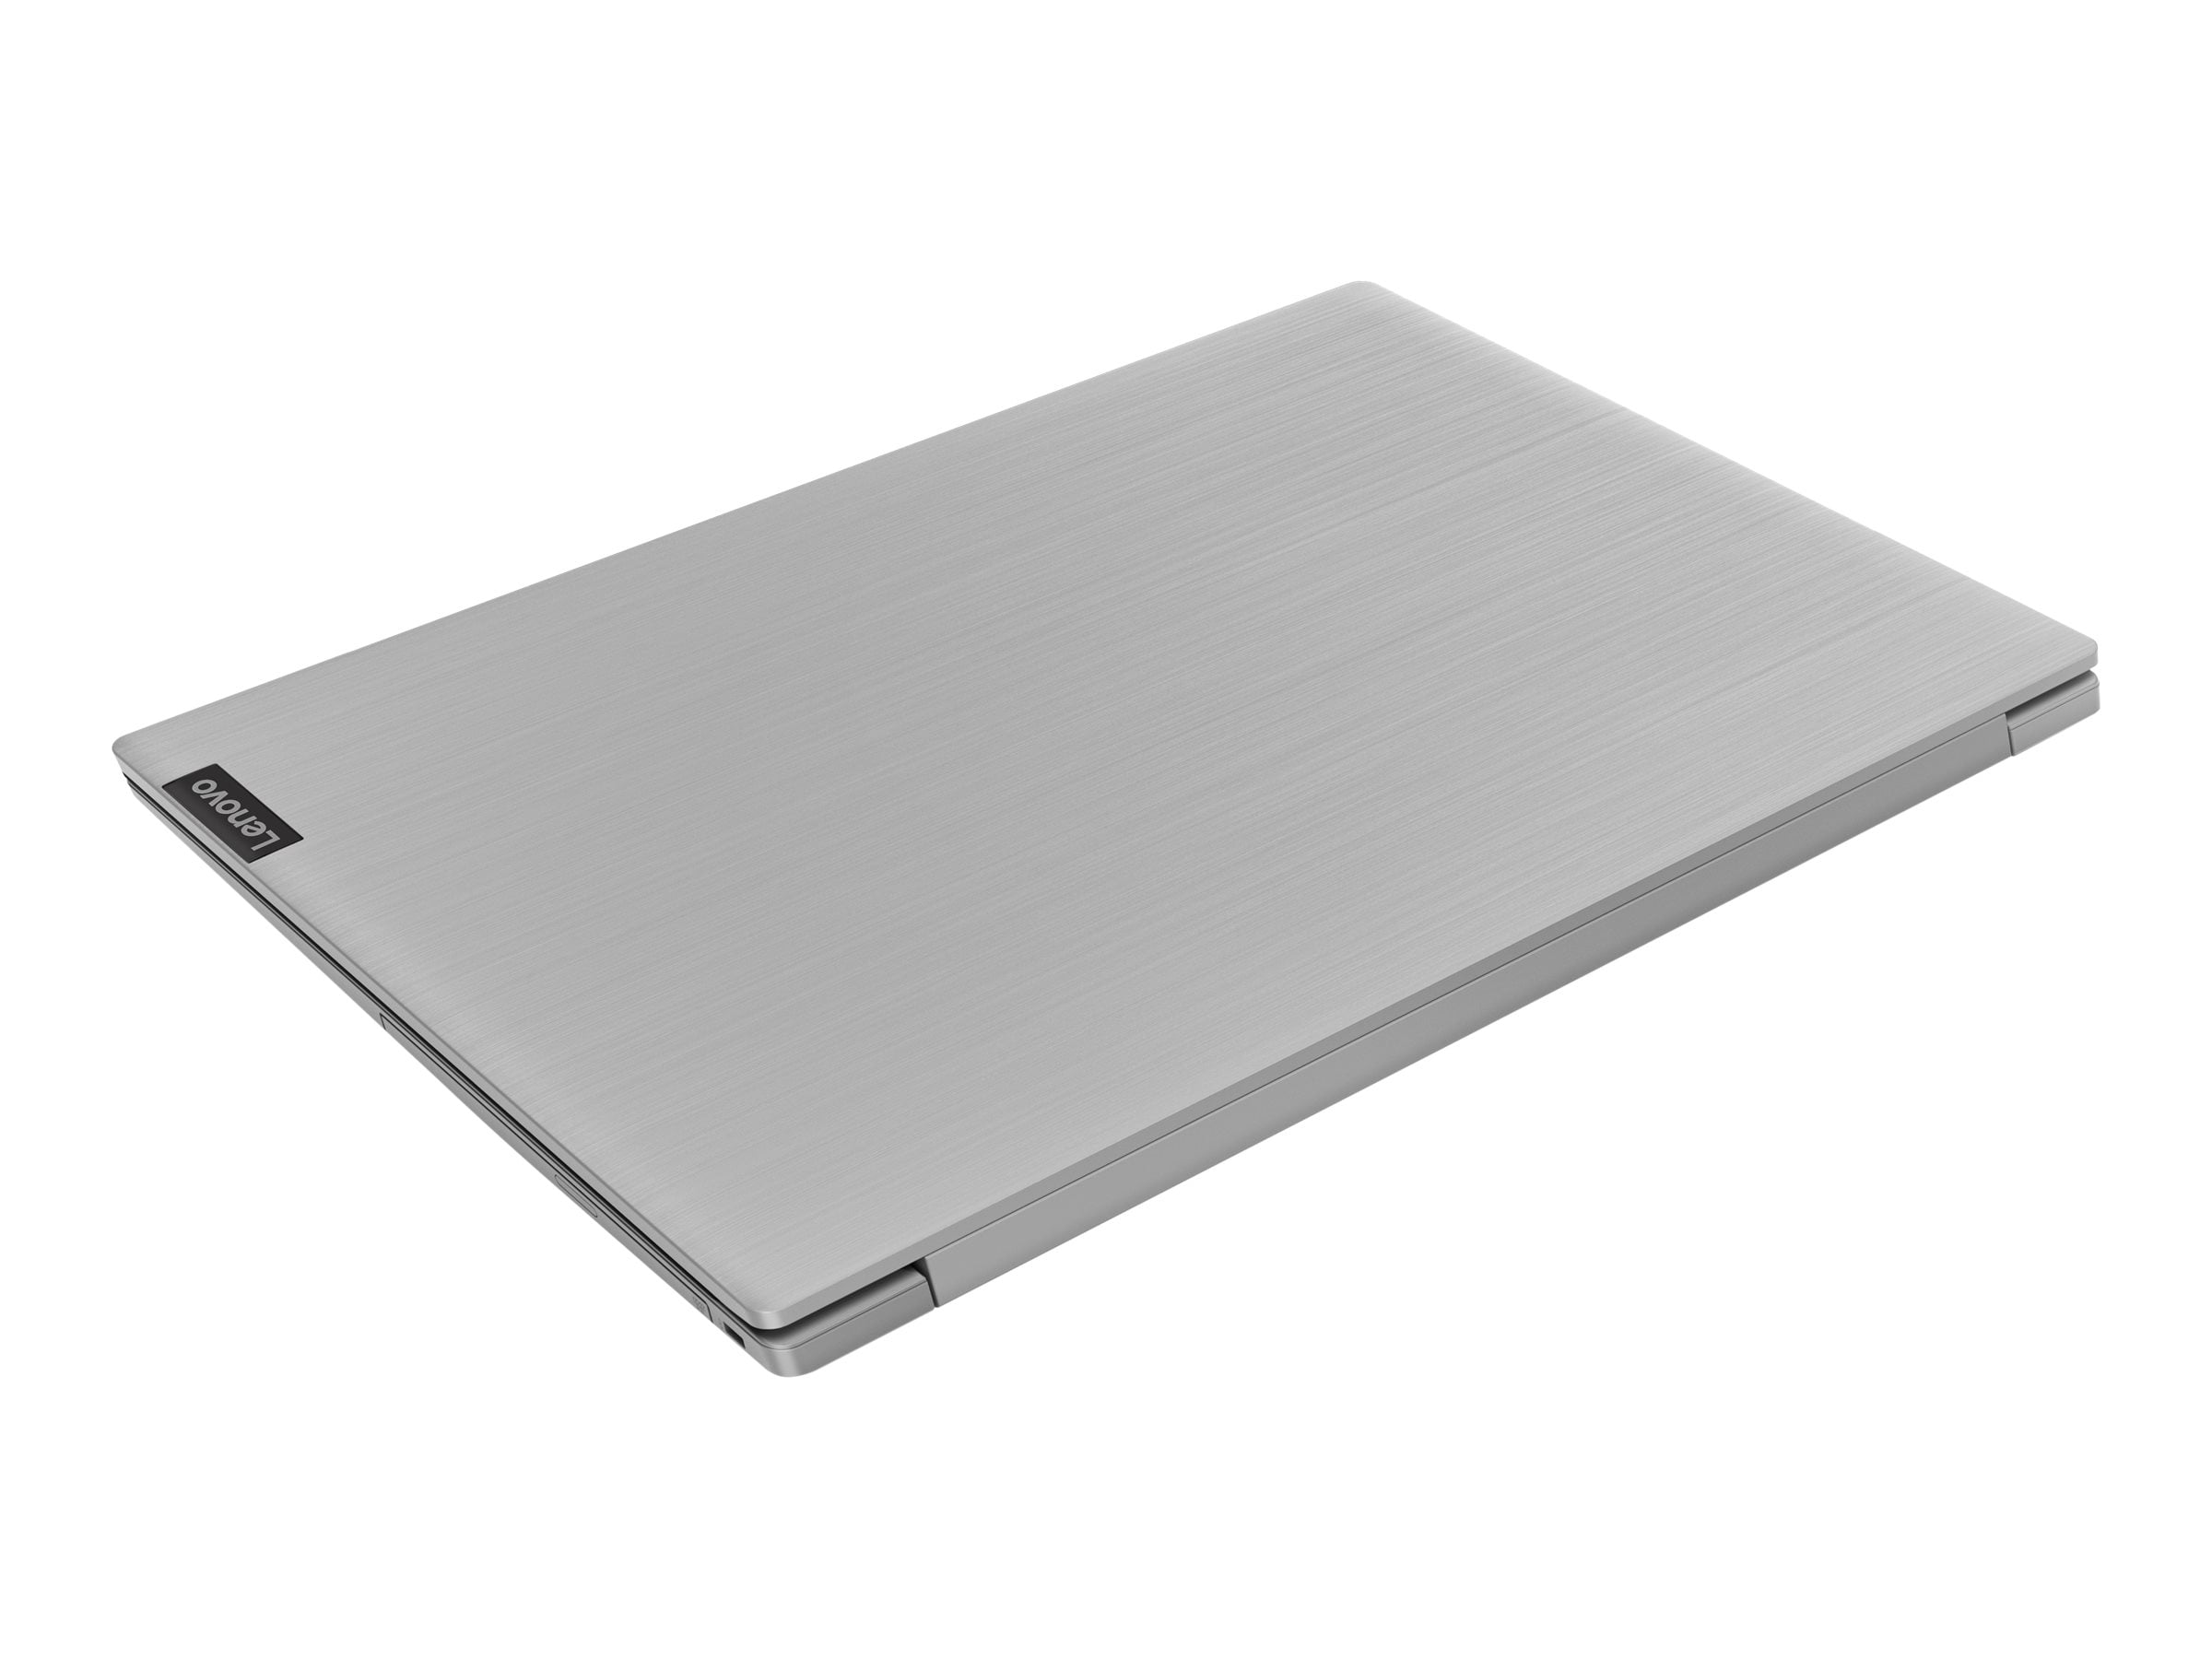 Lenovo IdeaPad L340-17IWL 81M0 - Intel Core i3 8145U / 2.1 GHz - Windows 10  Home - UHD Graphics 620 - 8 GB RAM - 1 TB HDD - DVD-Writer - 17.3